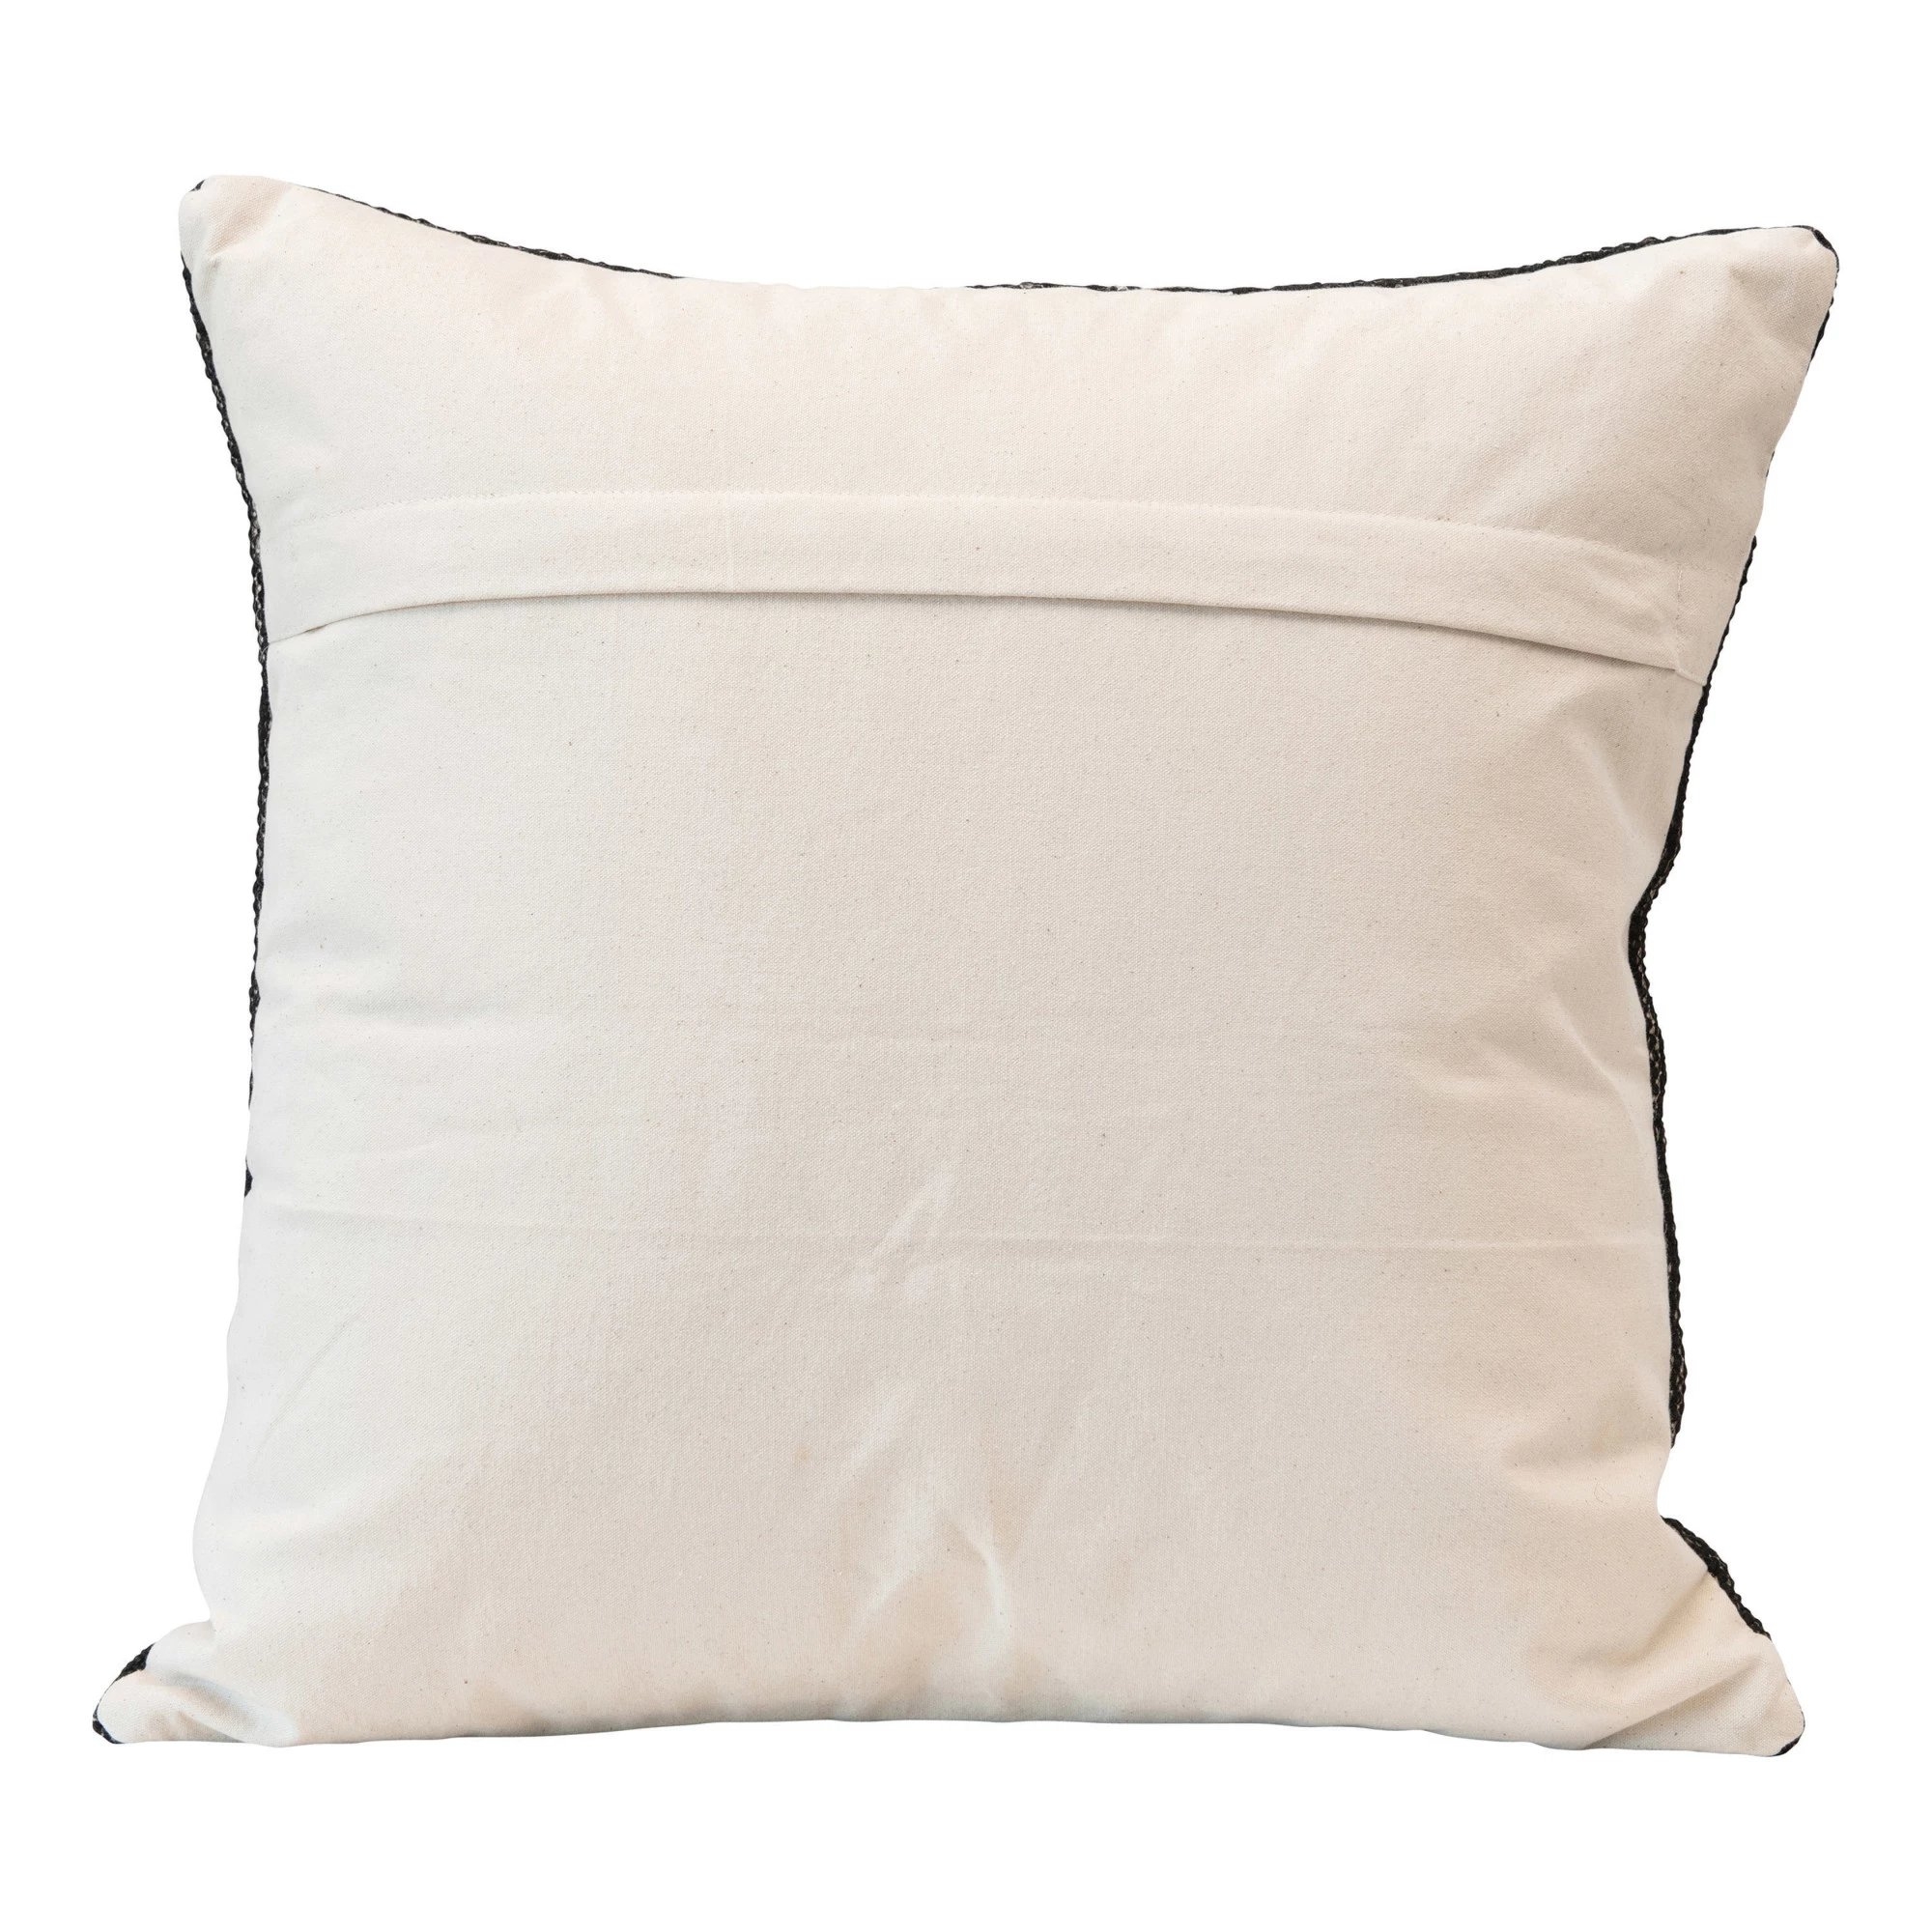 20" x 20" Boho Stripe Woven Cotton Pillow, White & Black, - Image 4